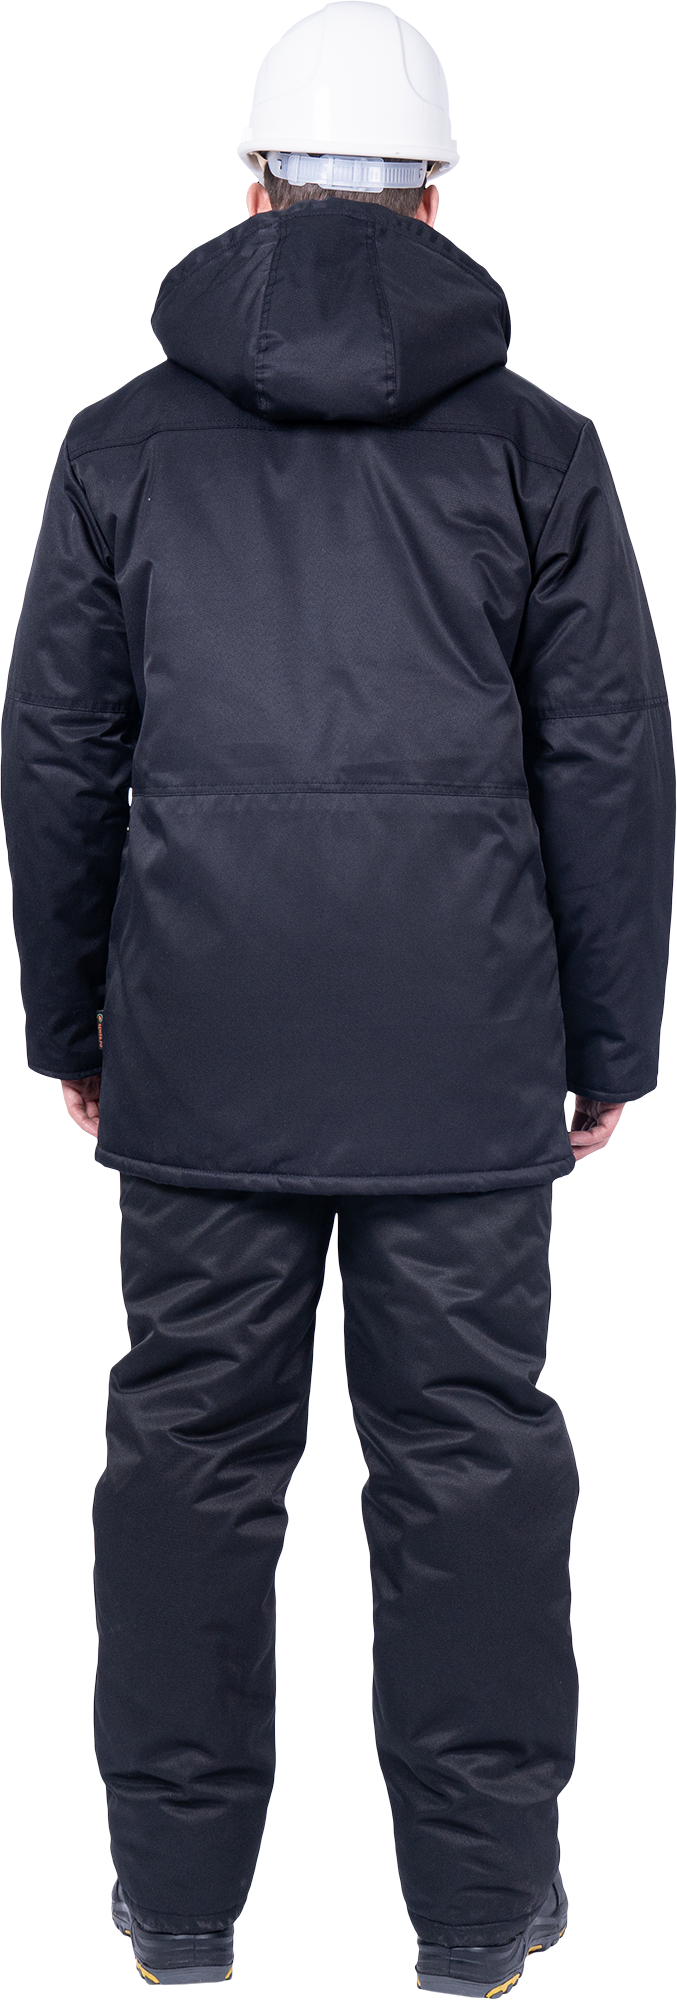 Куртка ЗАЩИТА утеплённая, черная